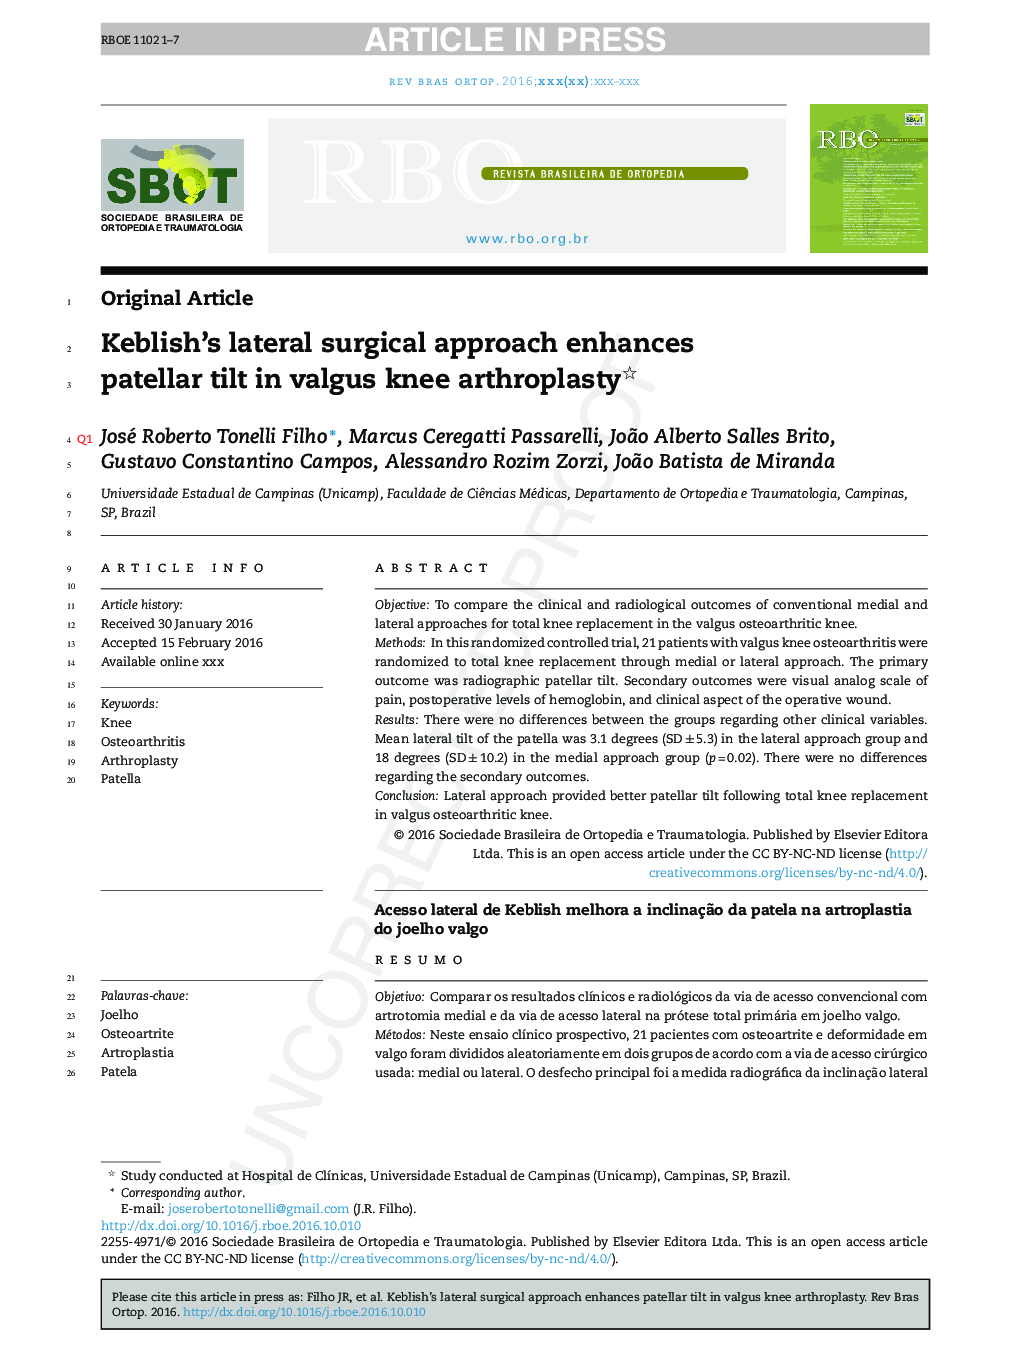 Keblish's lateral surgical approach enhances patellar tilt in valgus knee arthroplasty